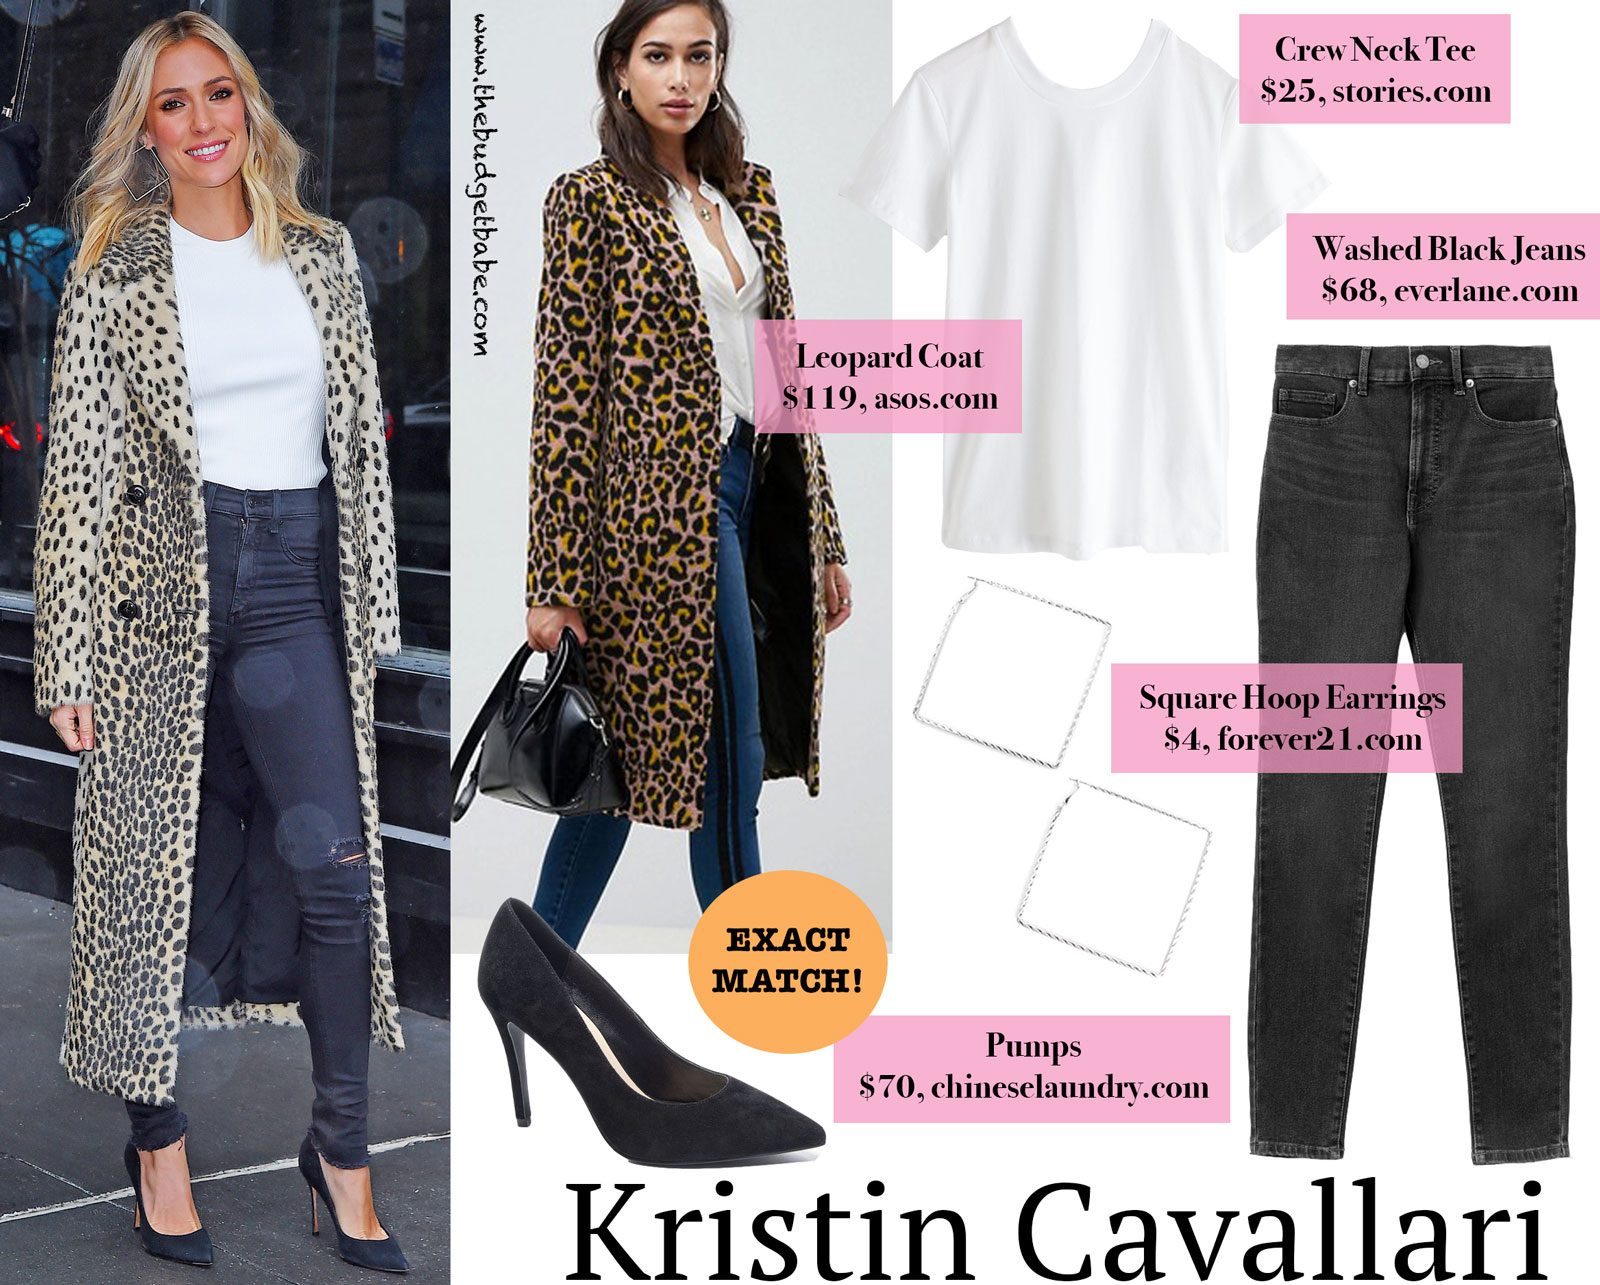 Kristin Cavallari Leopard Coat and Square Earrings Look for Less